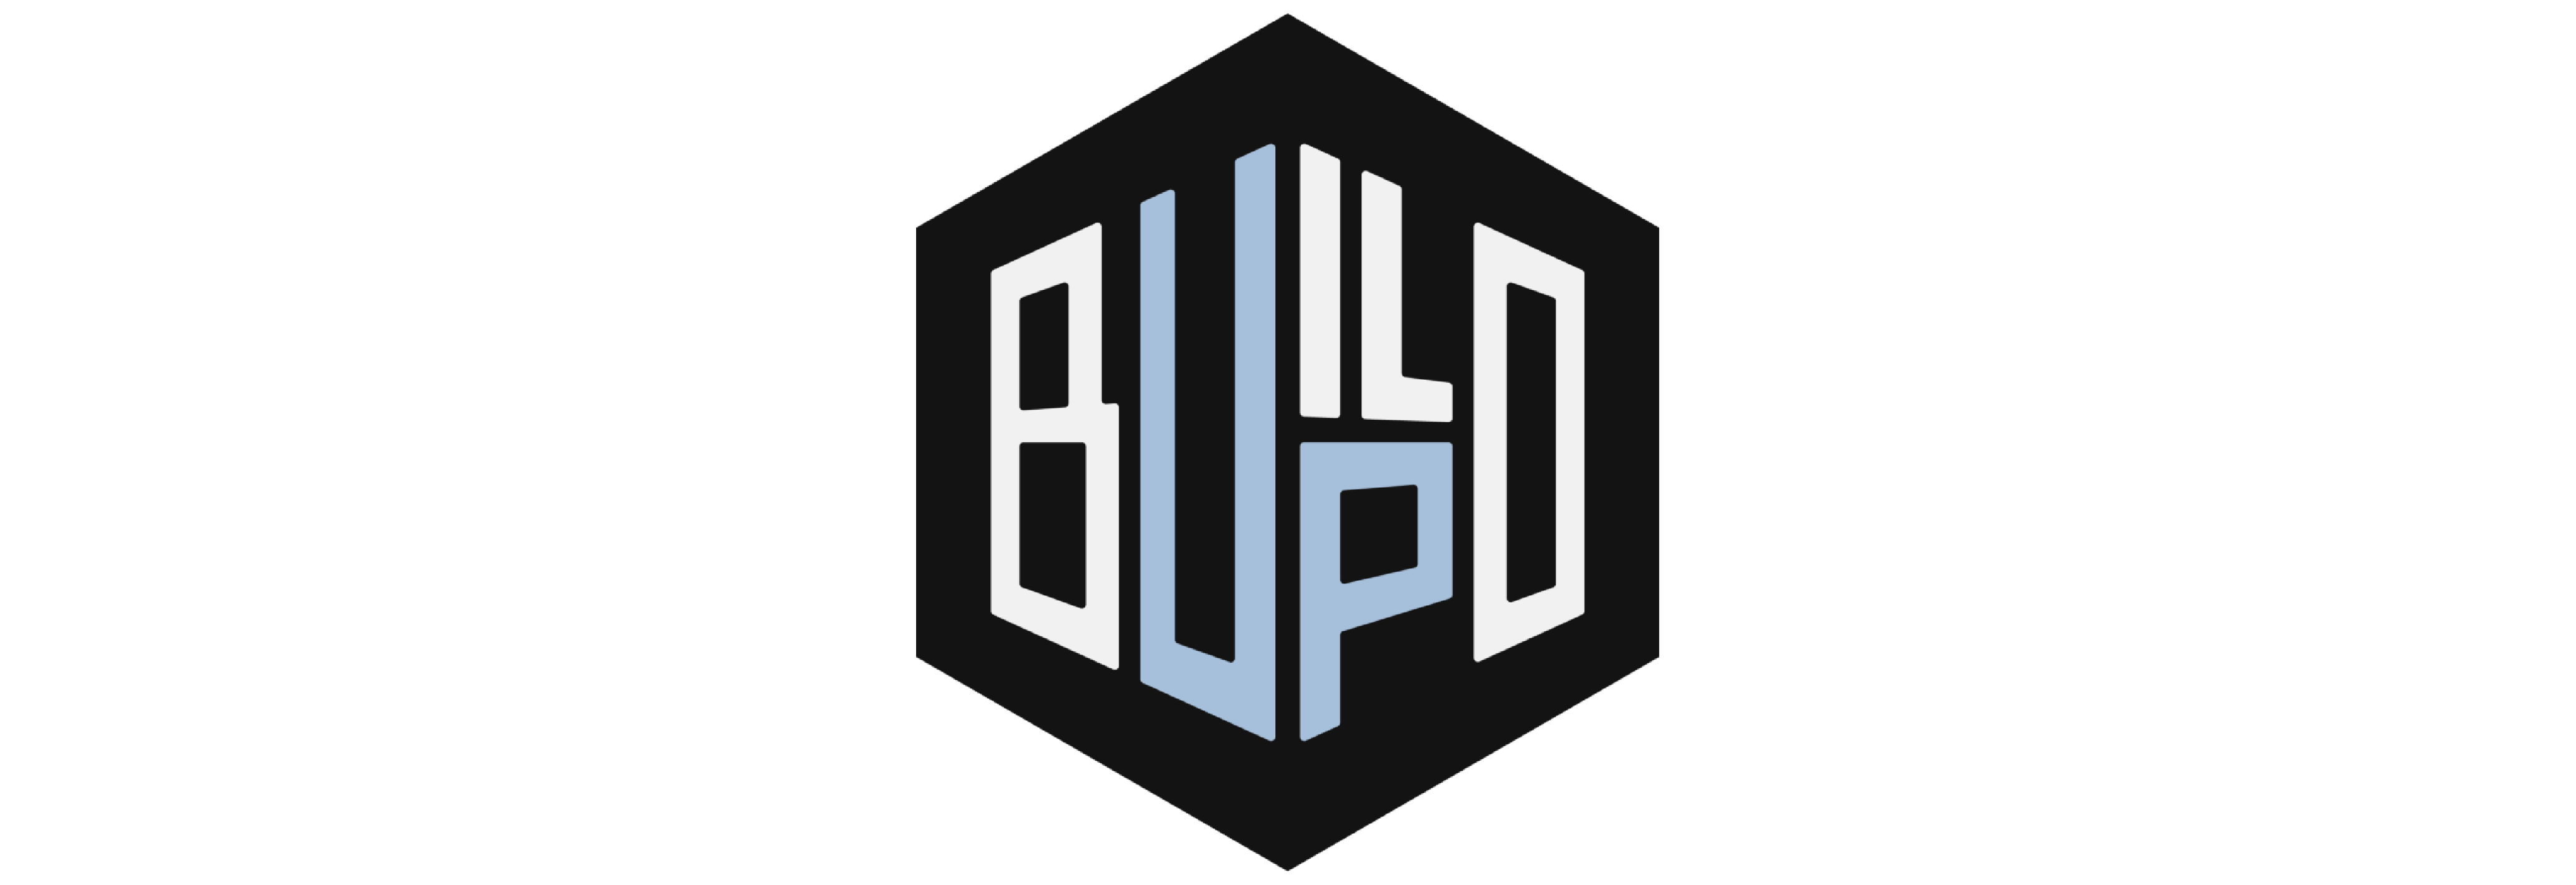 buildup logo